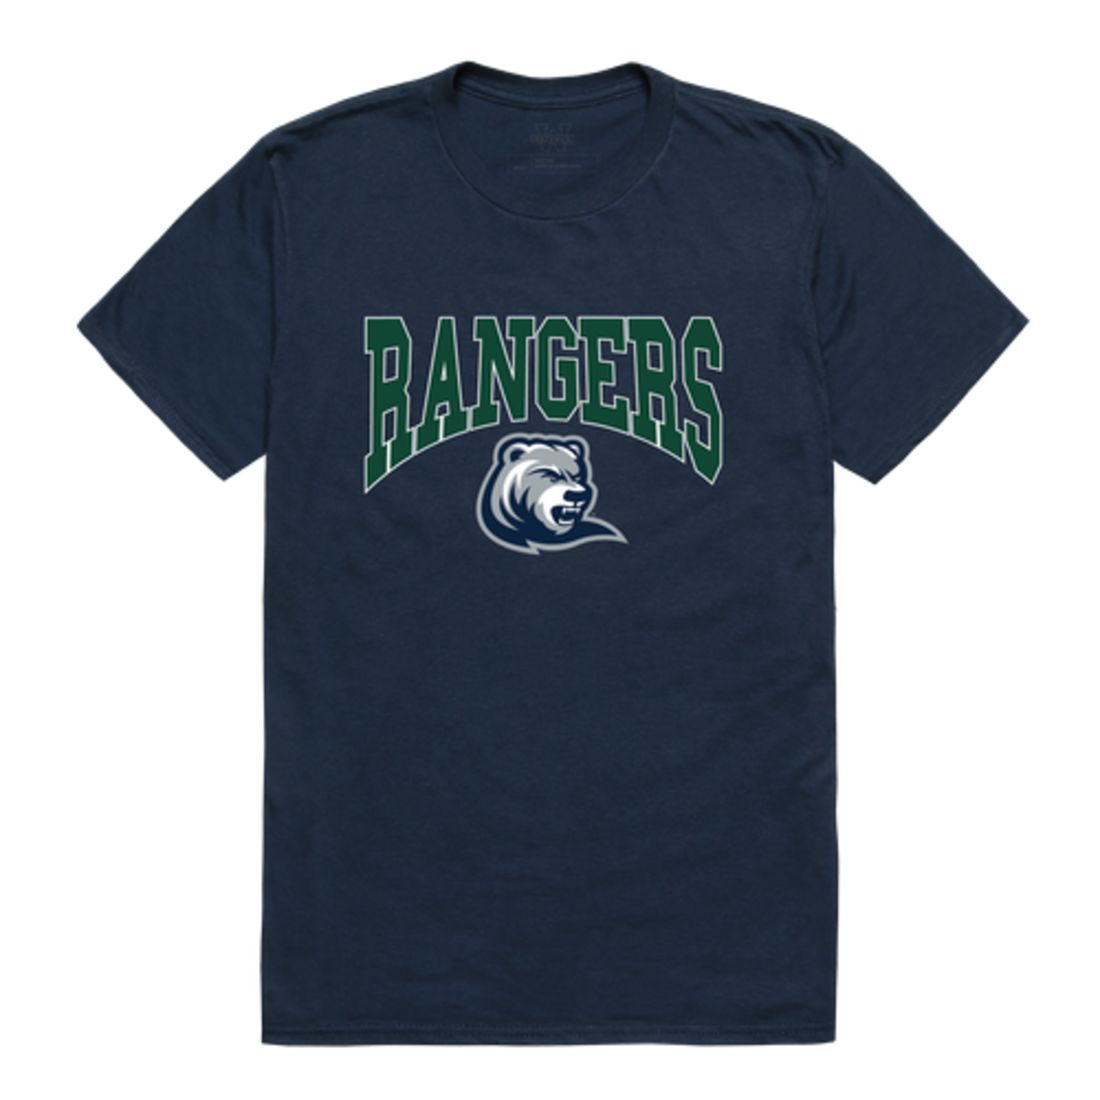 Drew University Rangers Athletic T-Shirt Tee